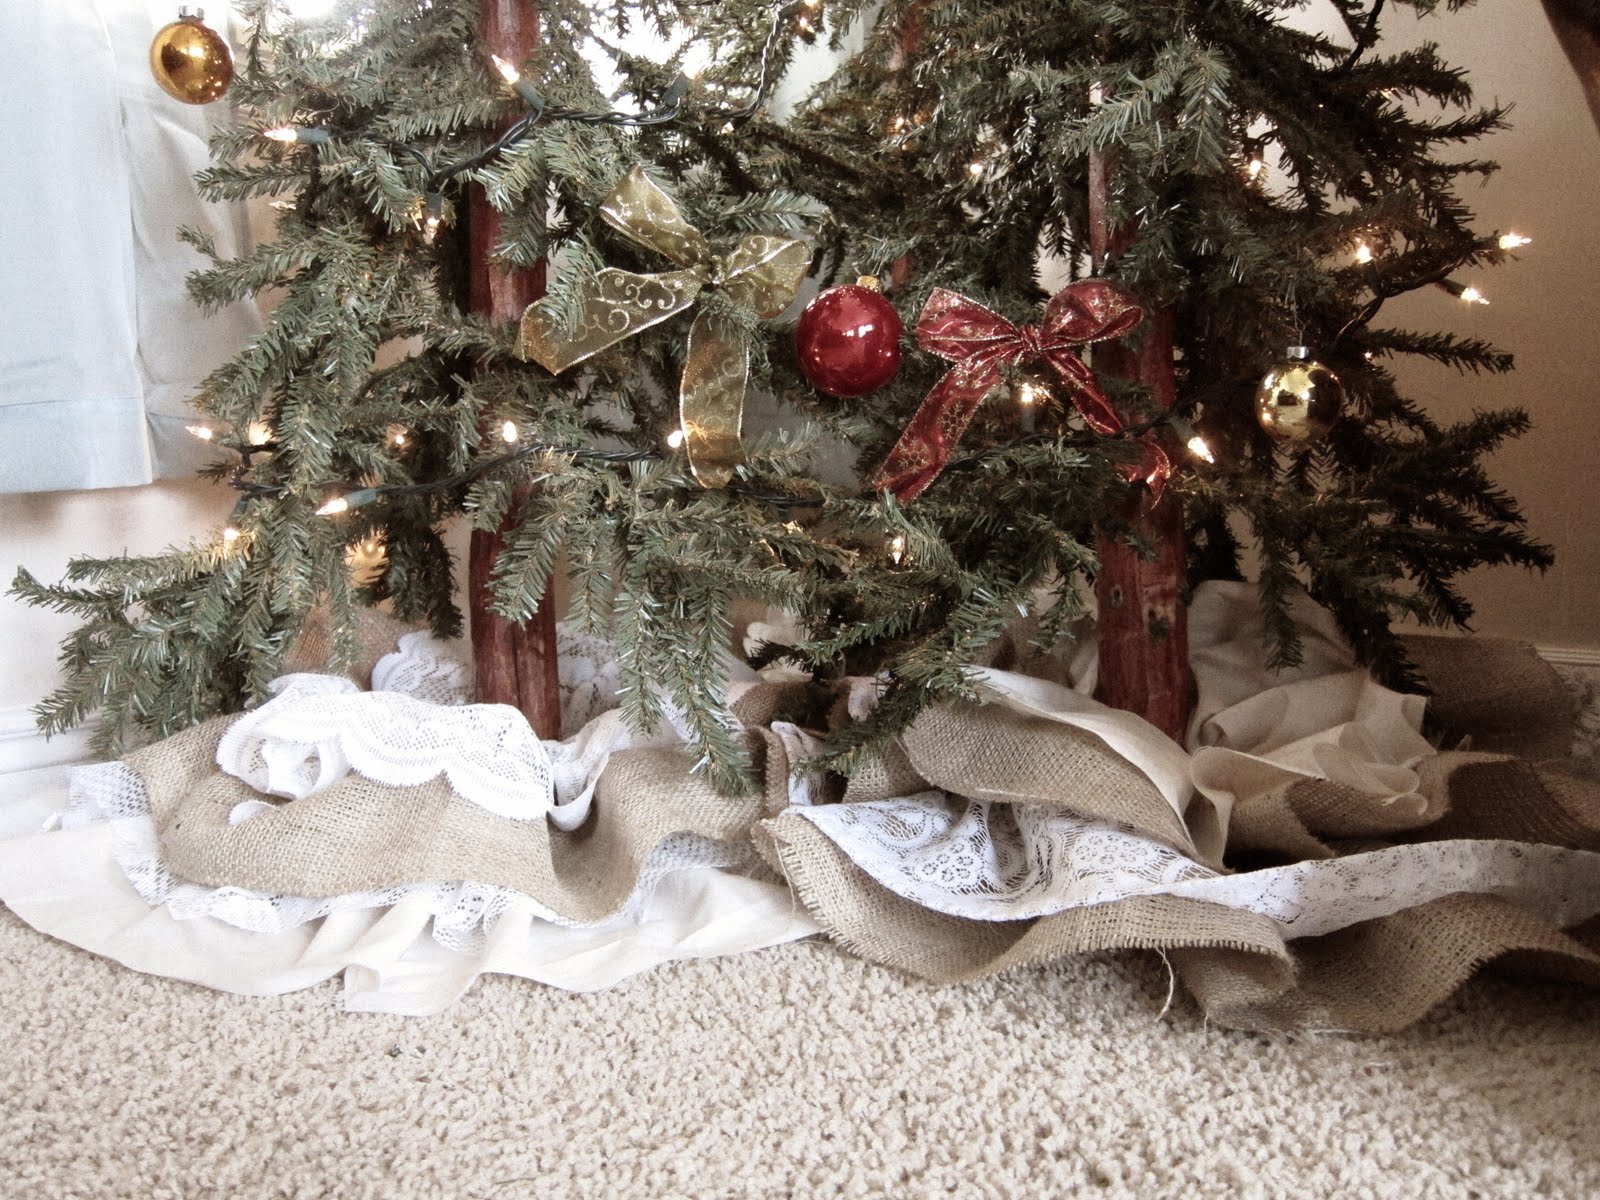 do it yourself divas: DIY: "Small" Christmas Tree Skirt